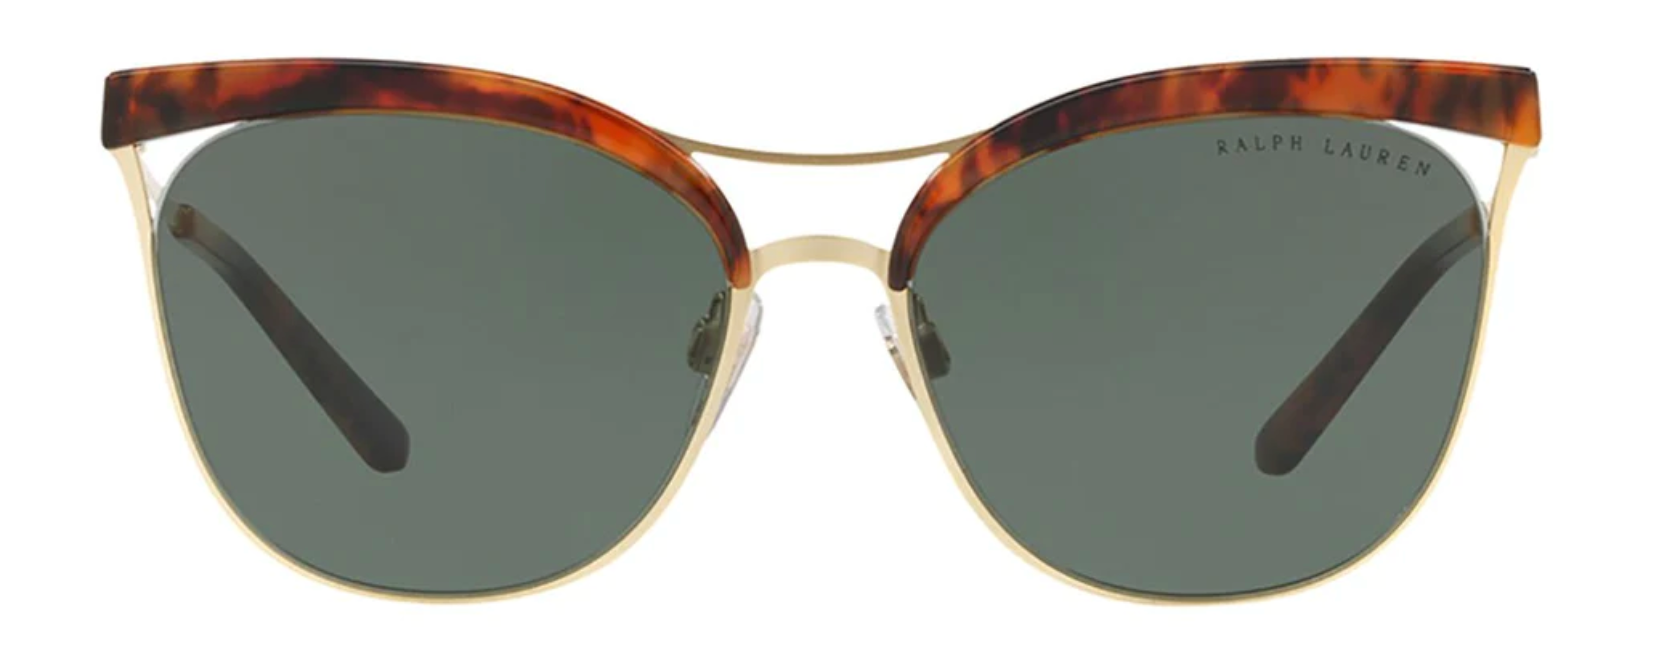 Ralph Lauren Women's Sunglasses Browline Tortoise/Gold RL7061 935471